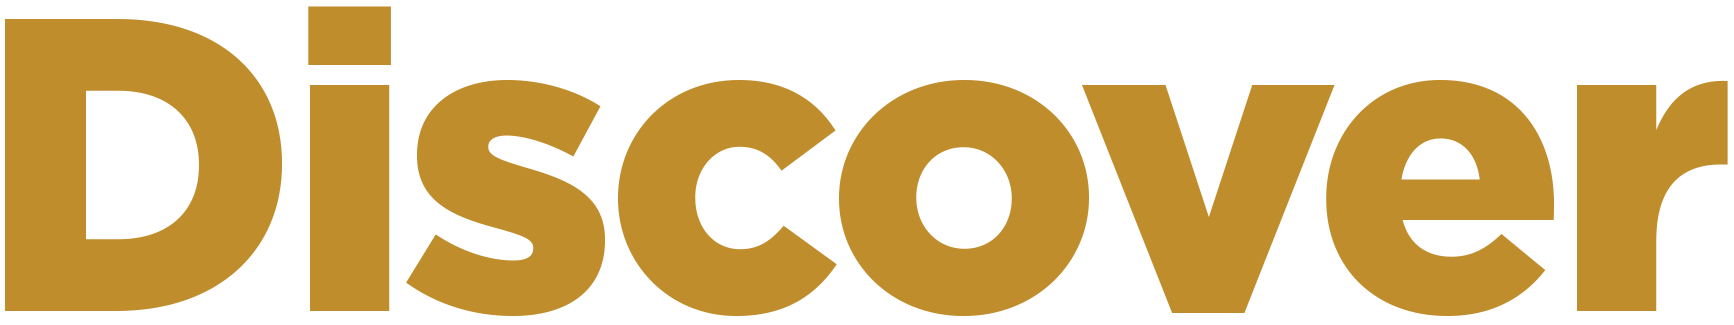 HCC Logo - Houston Community College | HCC